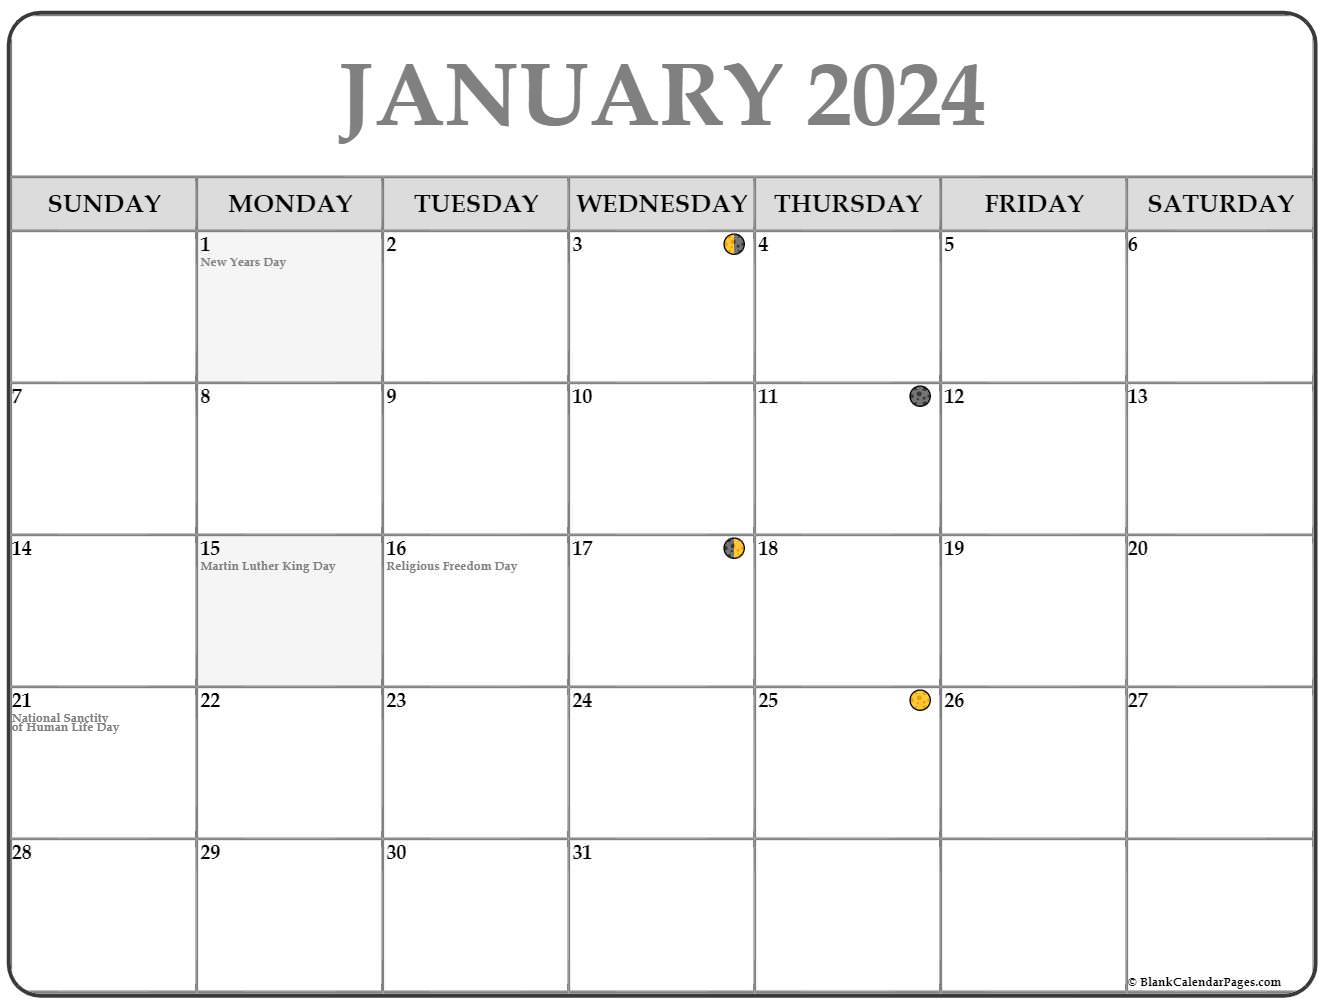 Lunar Calendar July 2022 January 2022 Lunar Calendar | Moon Phase Calendar